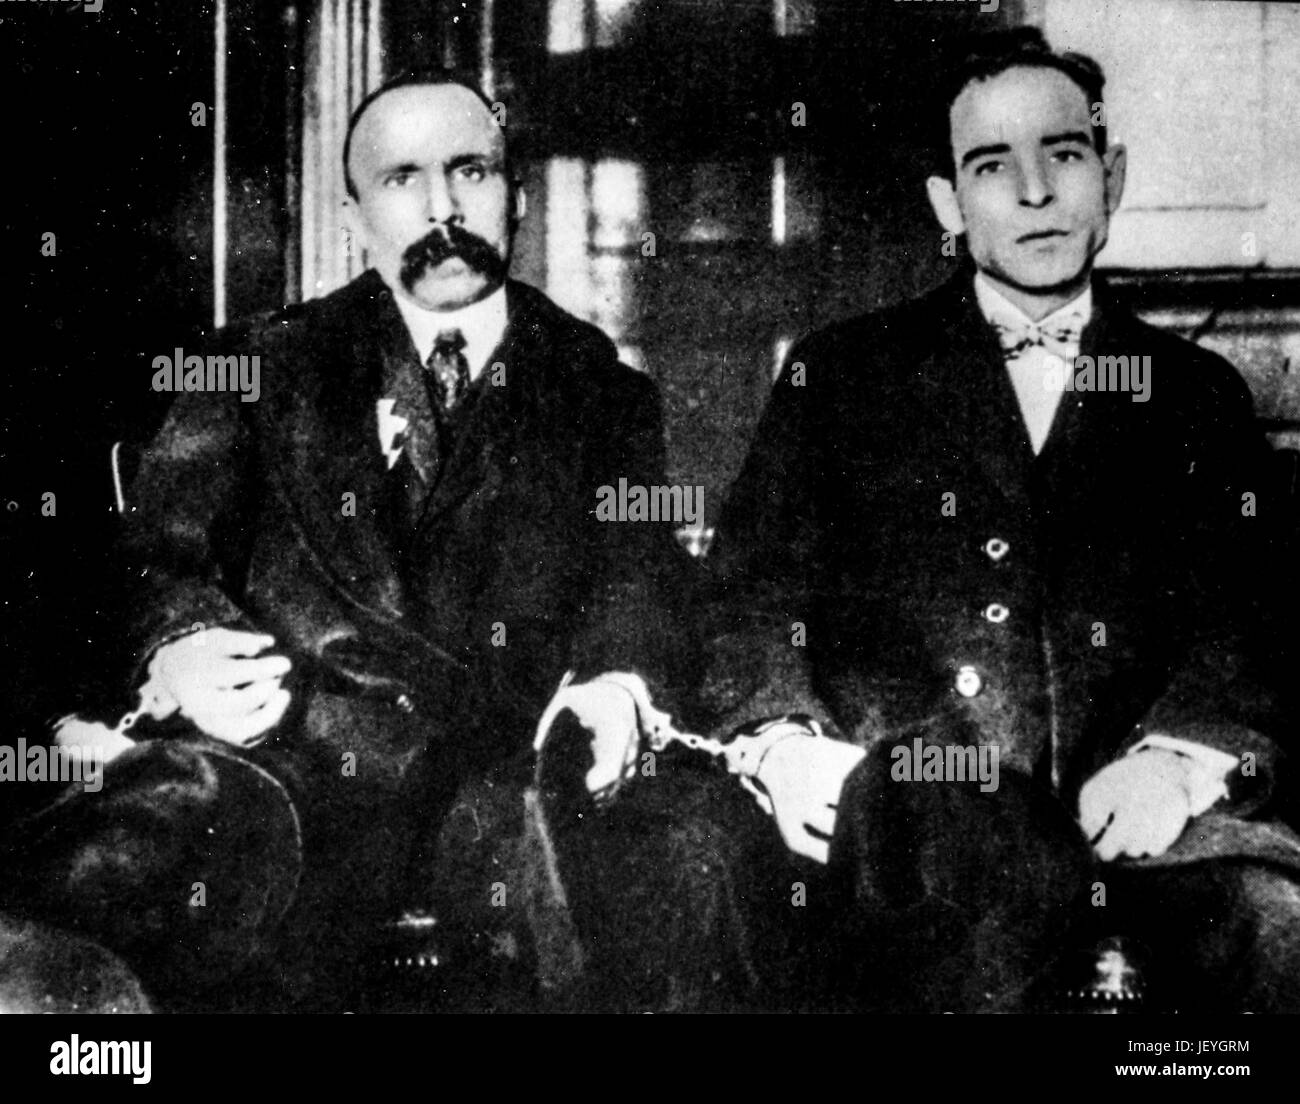 Bartolomeo Vanzetti et nicola sacco menottes en entendre la lecture de la sentence de mort, 1927 Banque D'Images